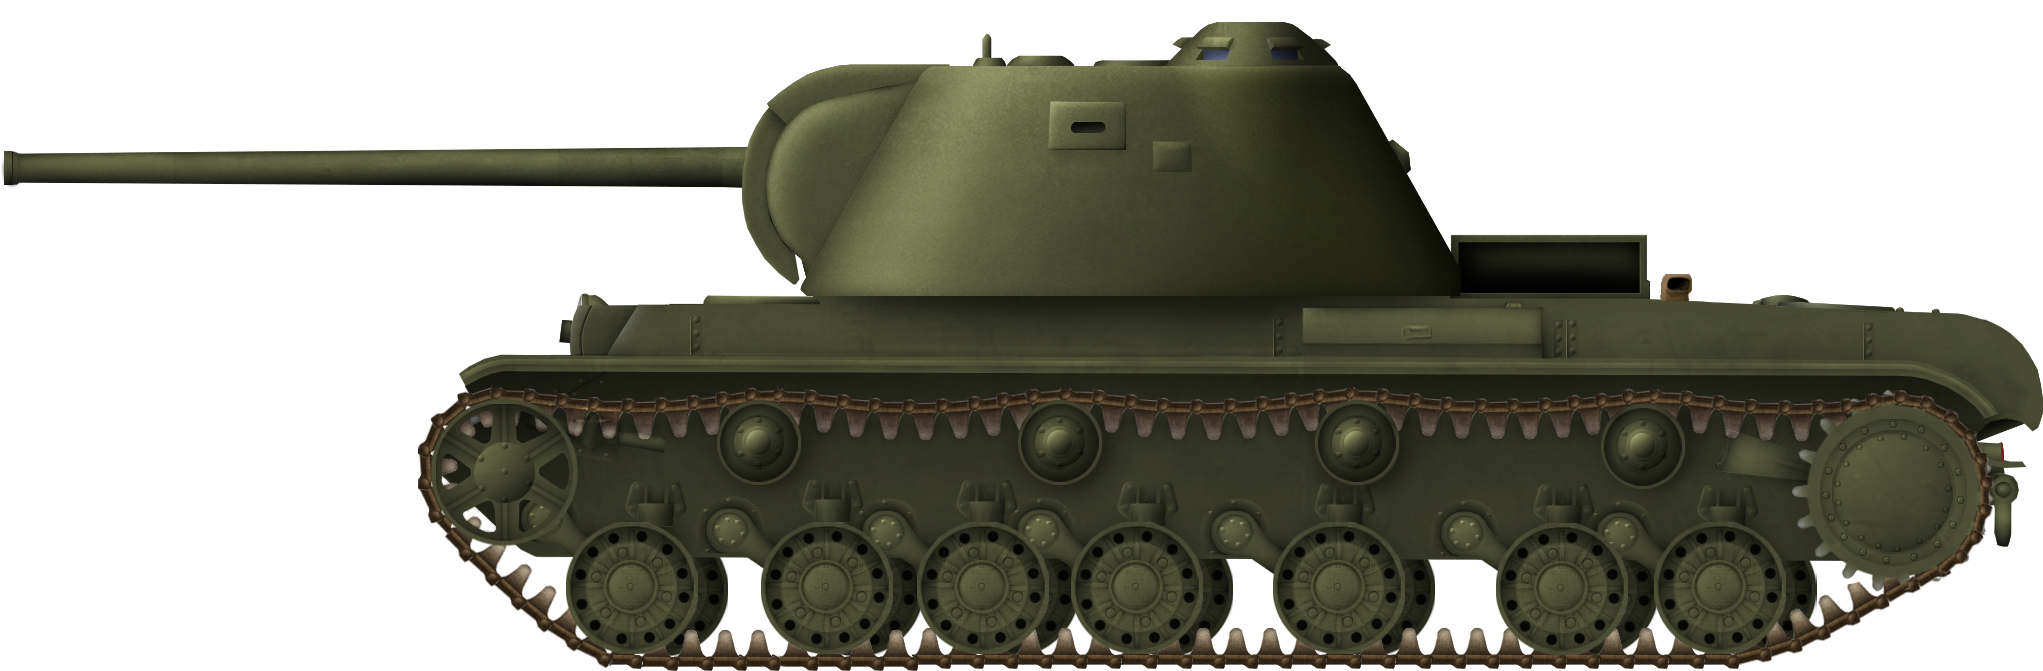 KV-3 (Object 223) - Tank Encyclopedia